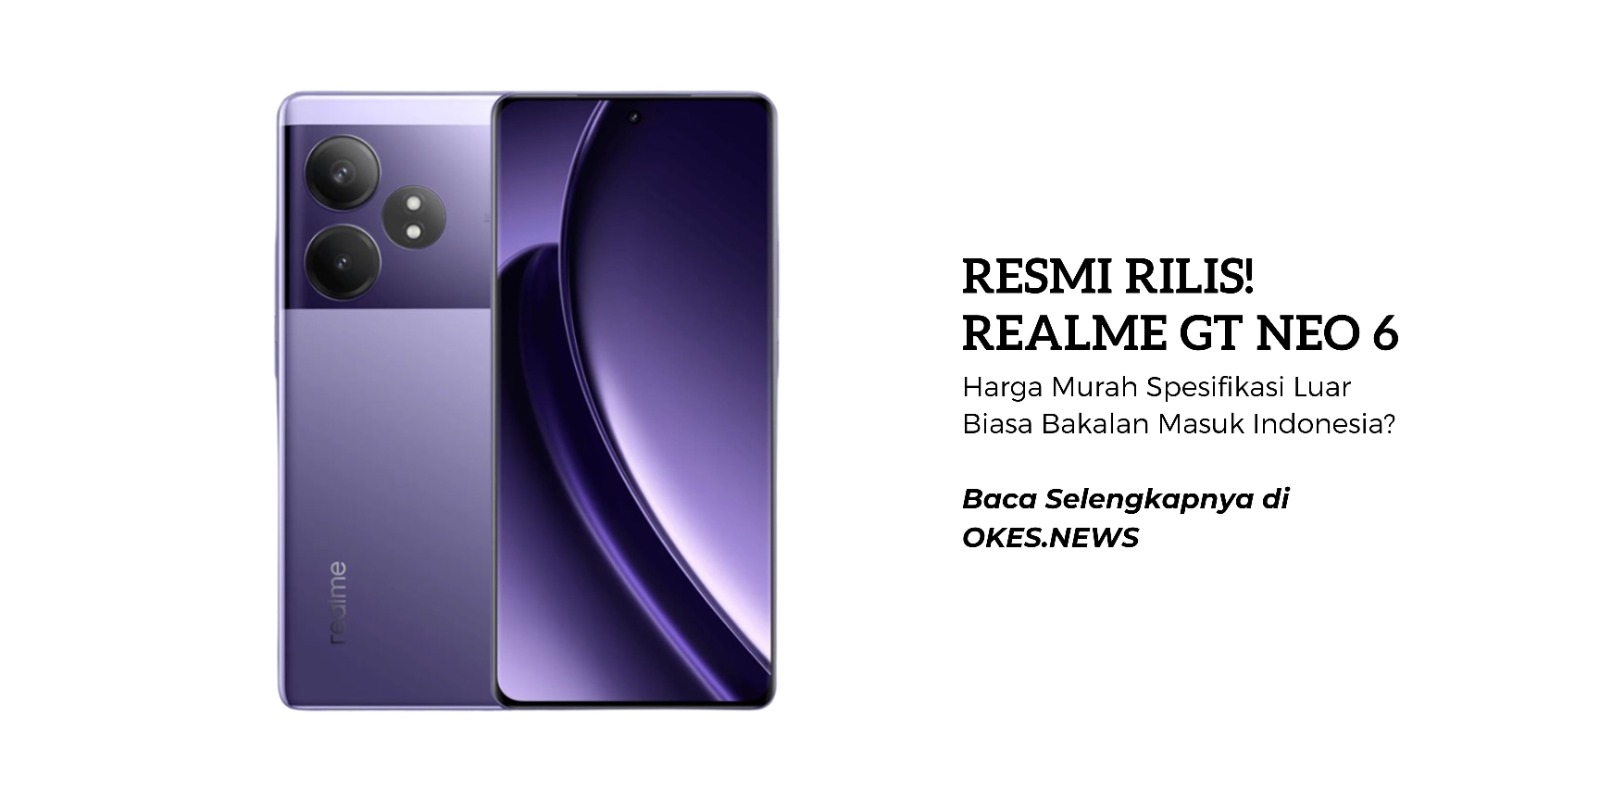  Resmi Rilis! Realme GT Neo 6 Harga Murah Spesifikasi Luar Biasa Bakalan Masuk Indonesia? Cek di Sini